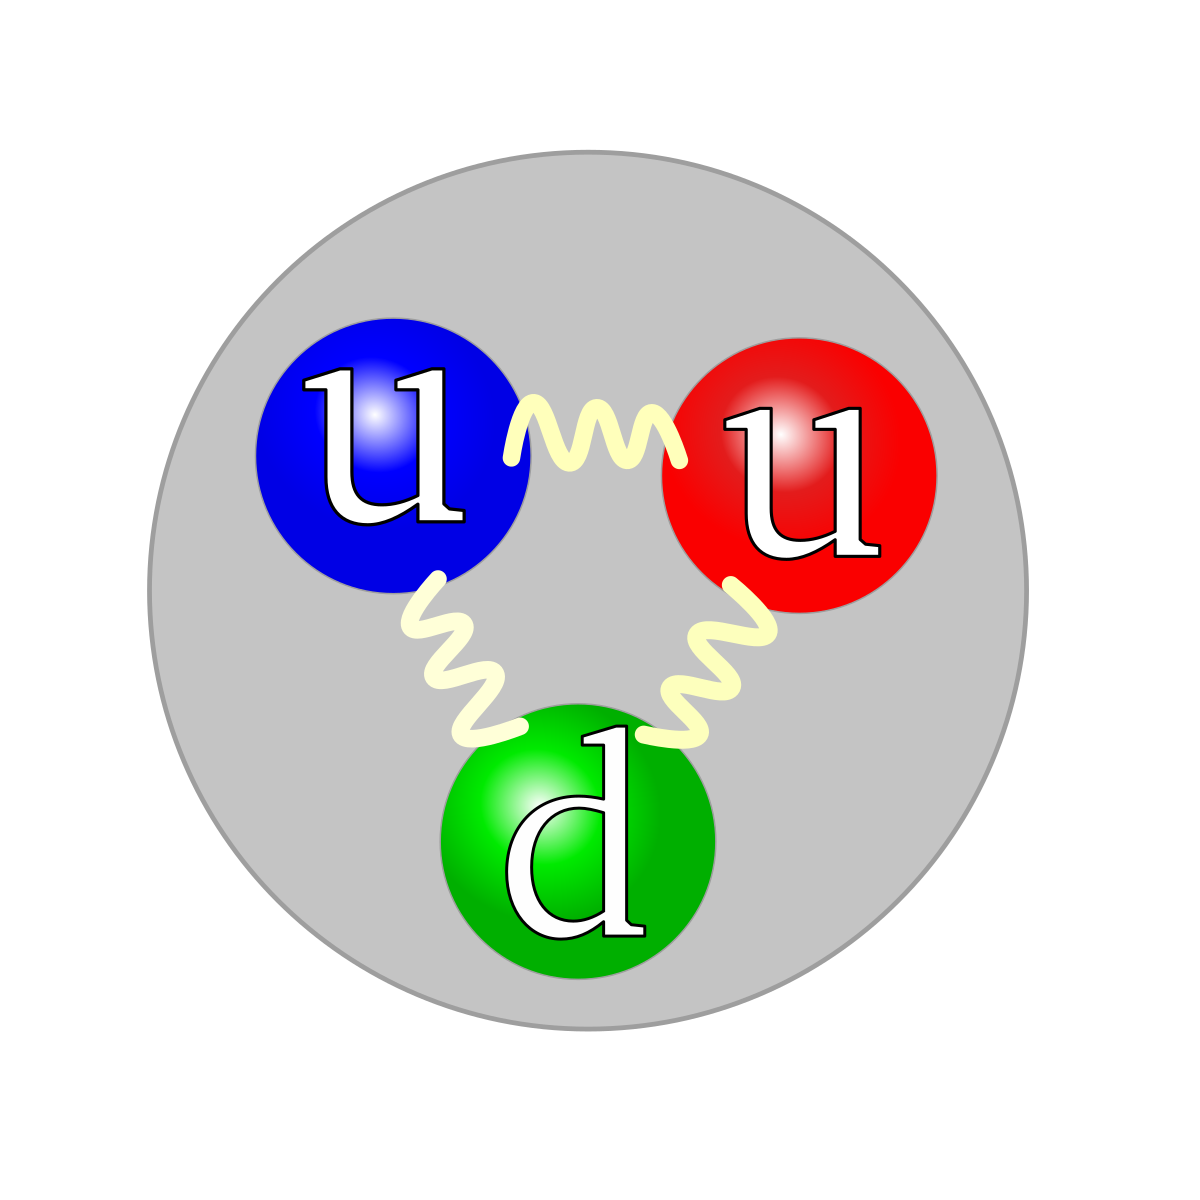 proton particle symbol